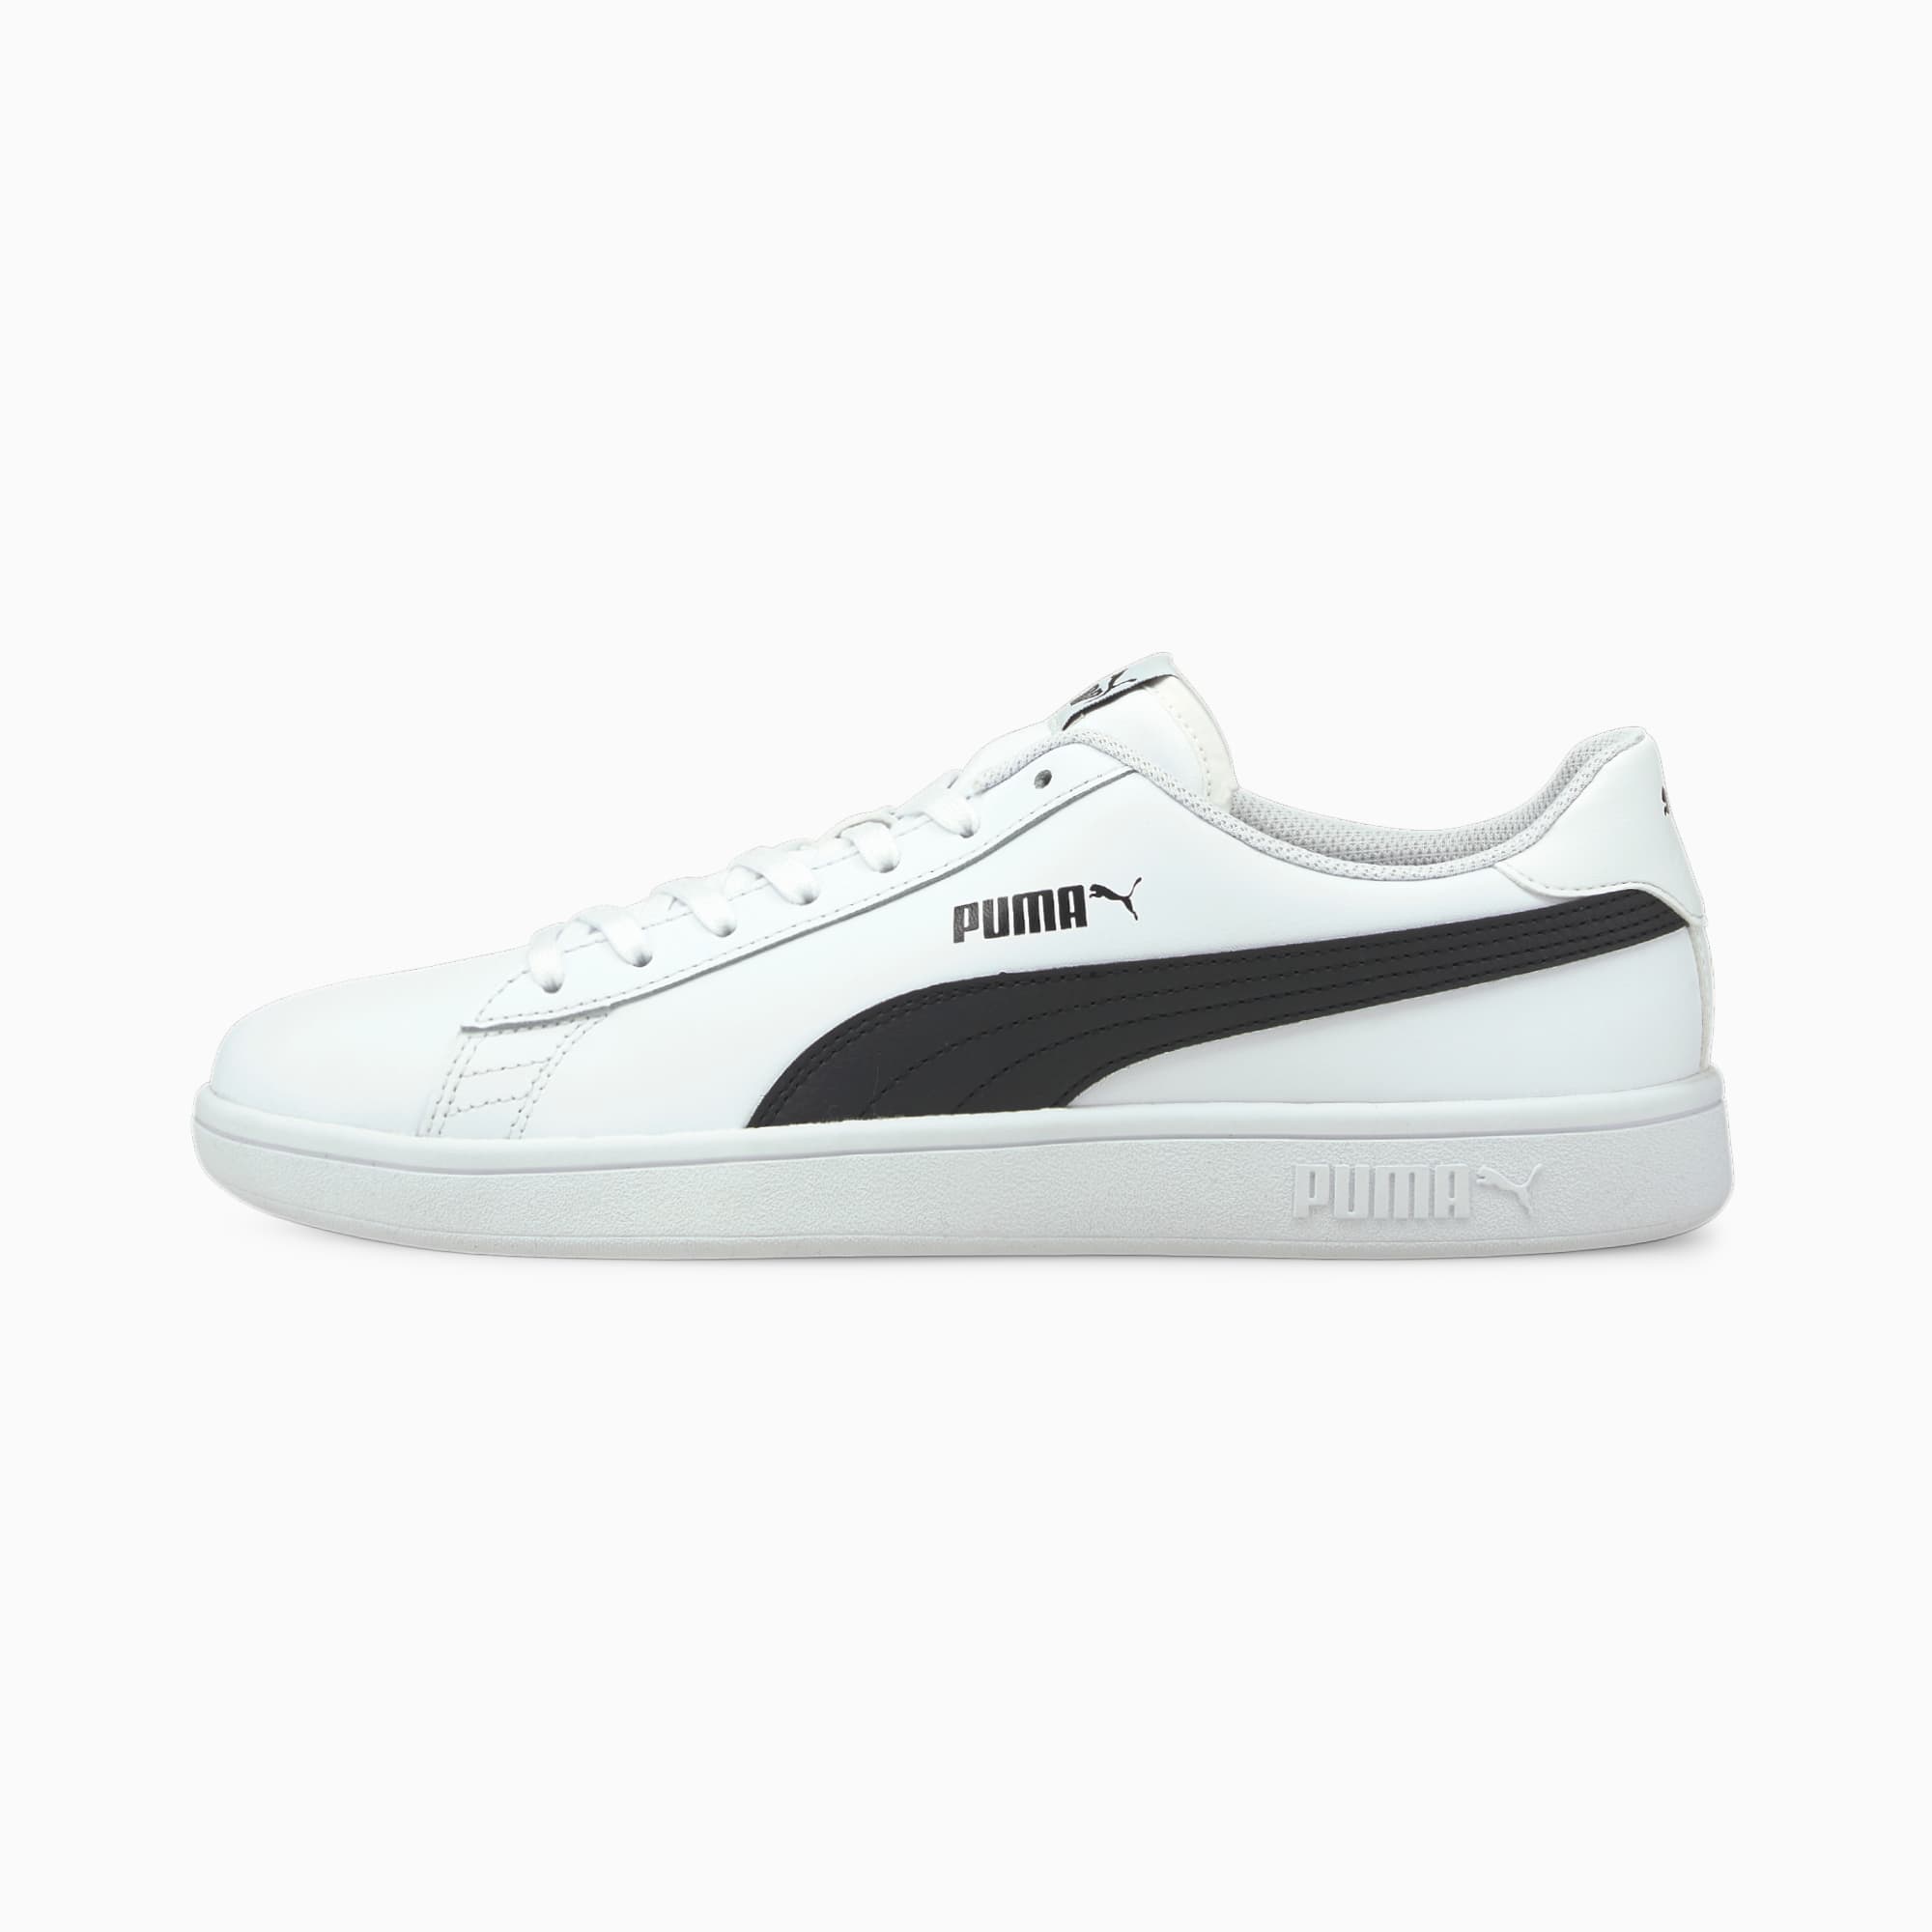 Chaussure Puma Smash v2 L, Blanc/Noir, Taille 39, Chaussures